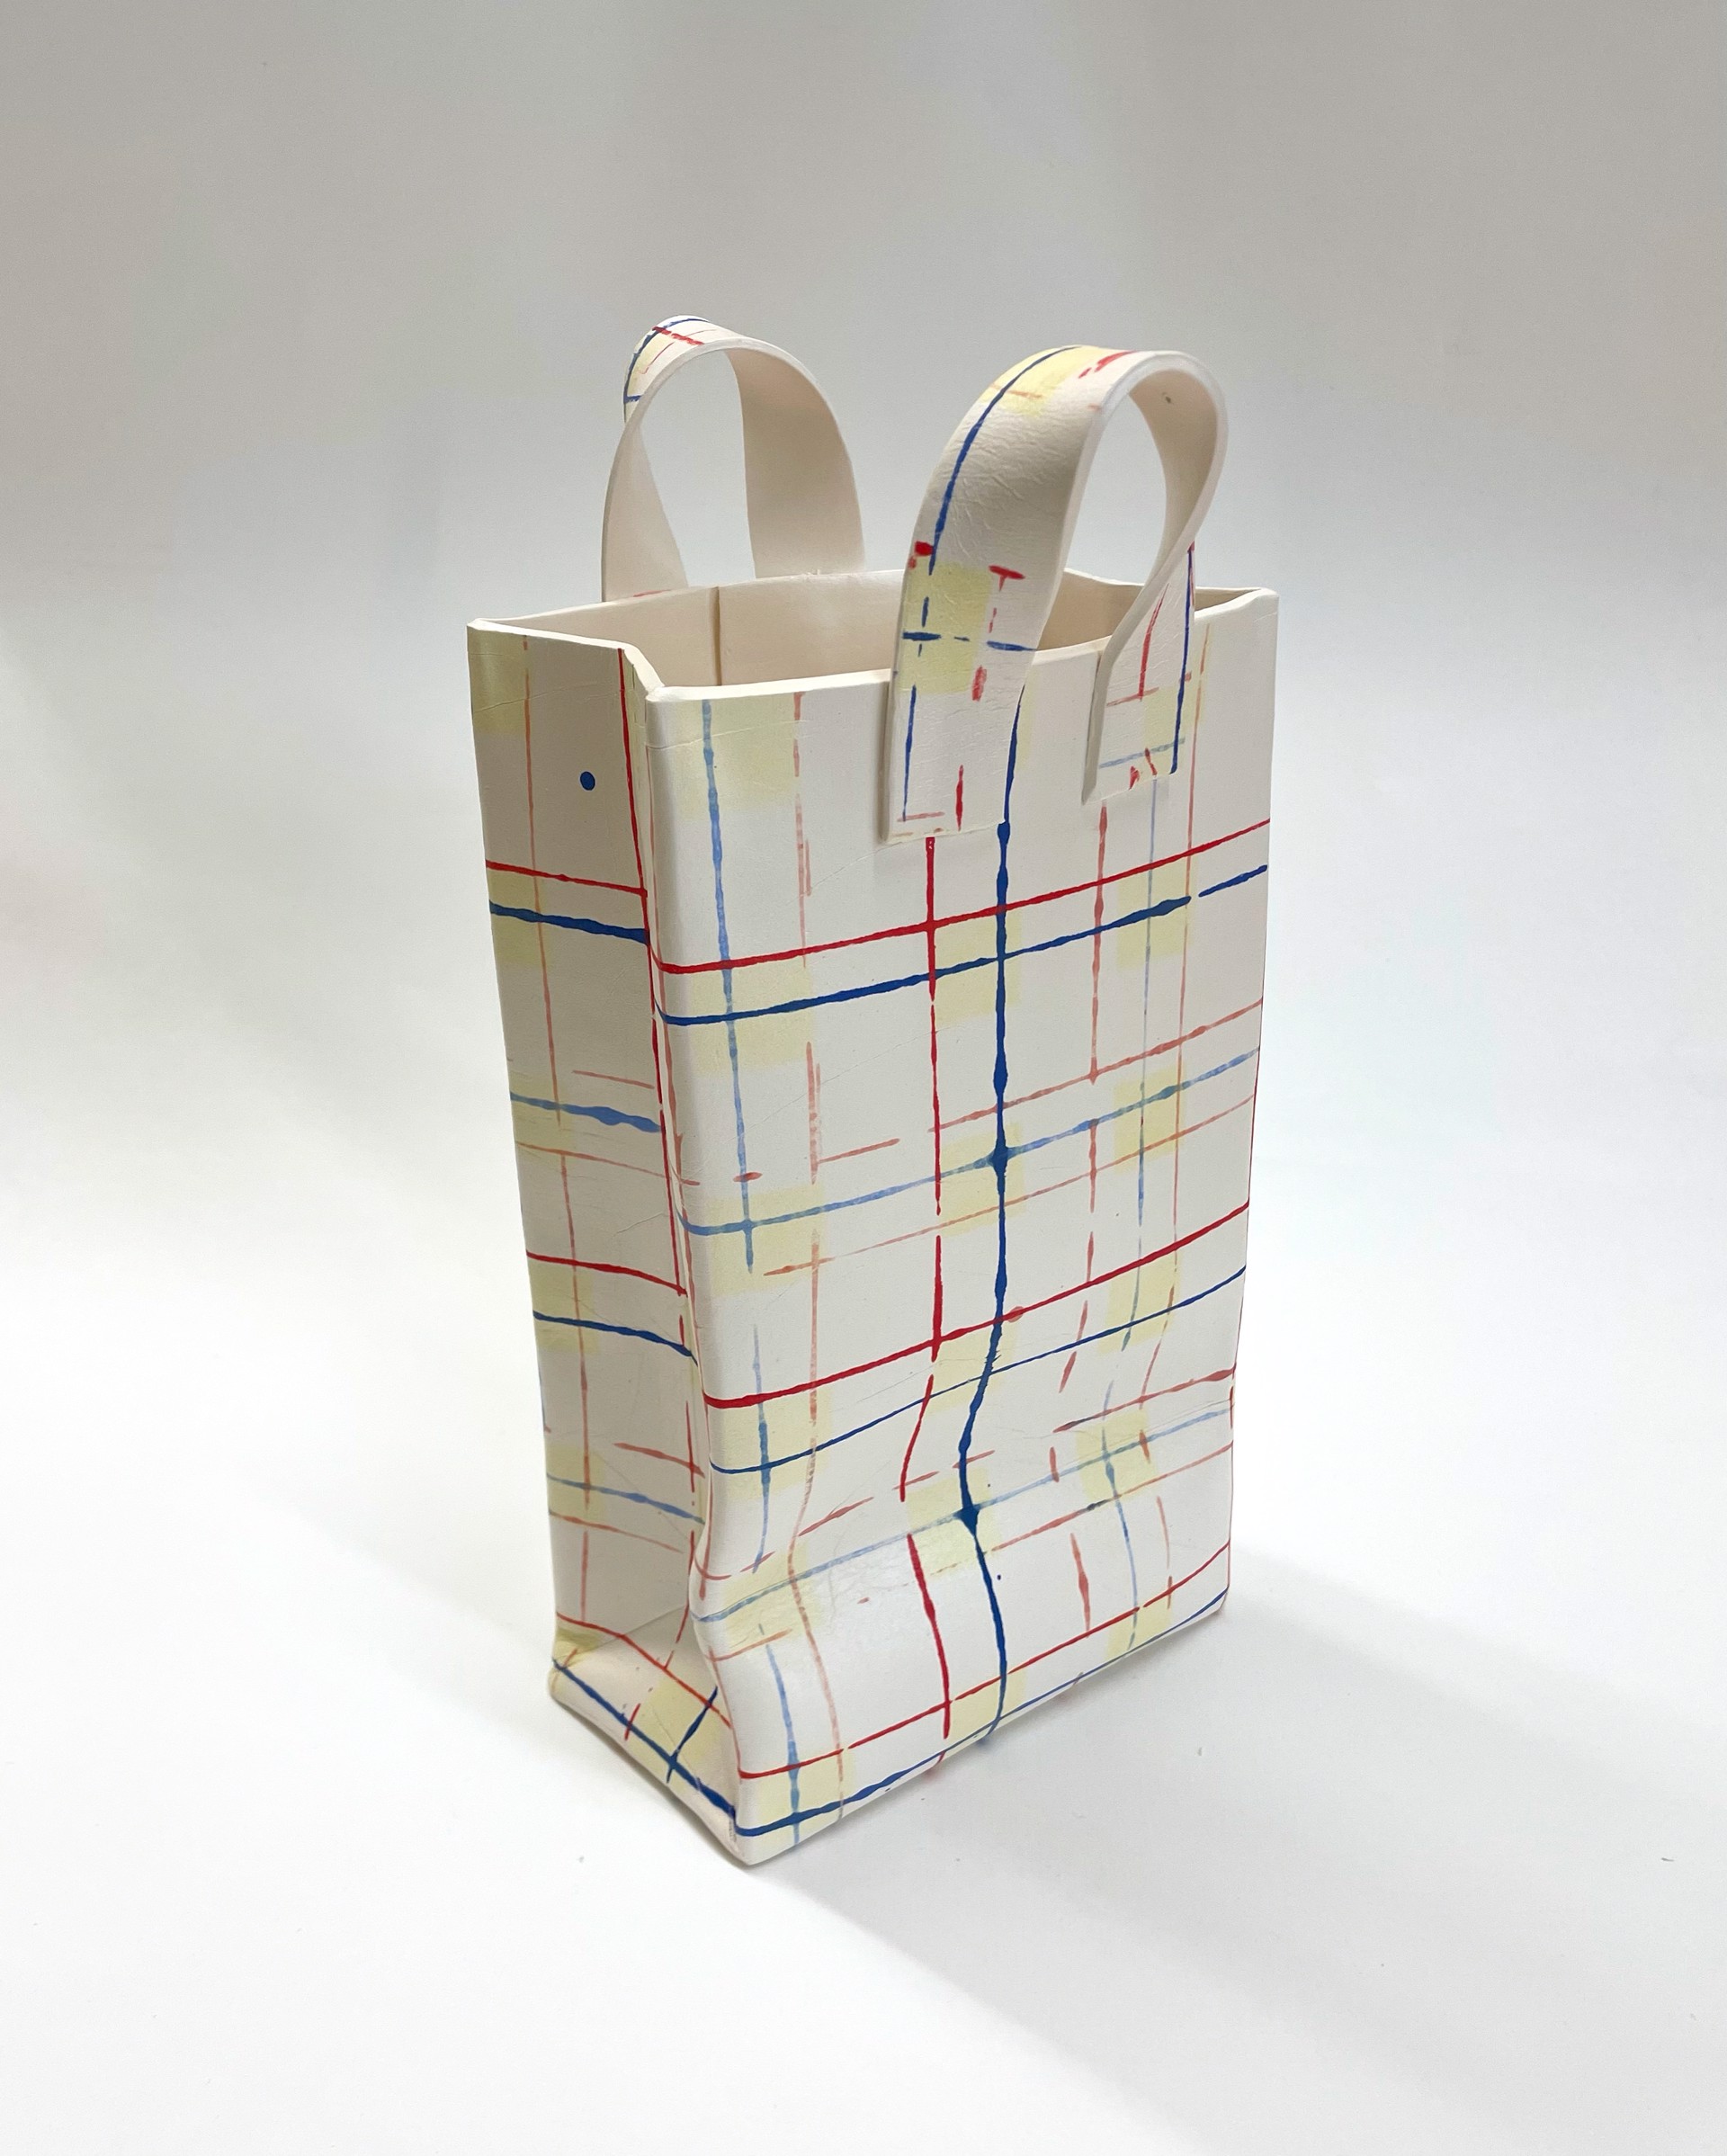 Striped and Checkered Bag by Chandra Beadleston